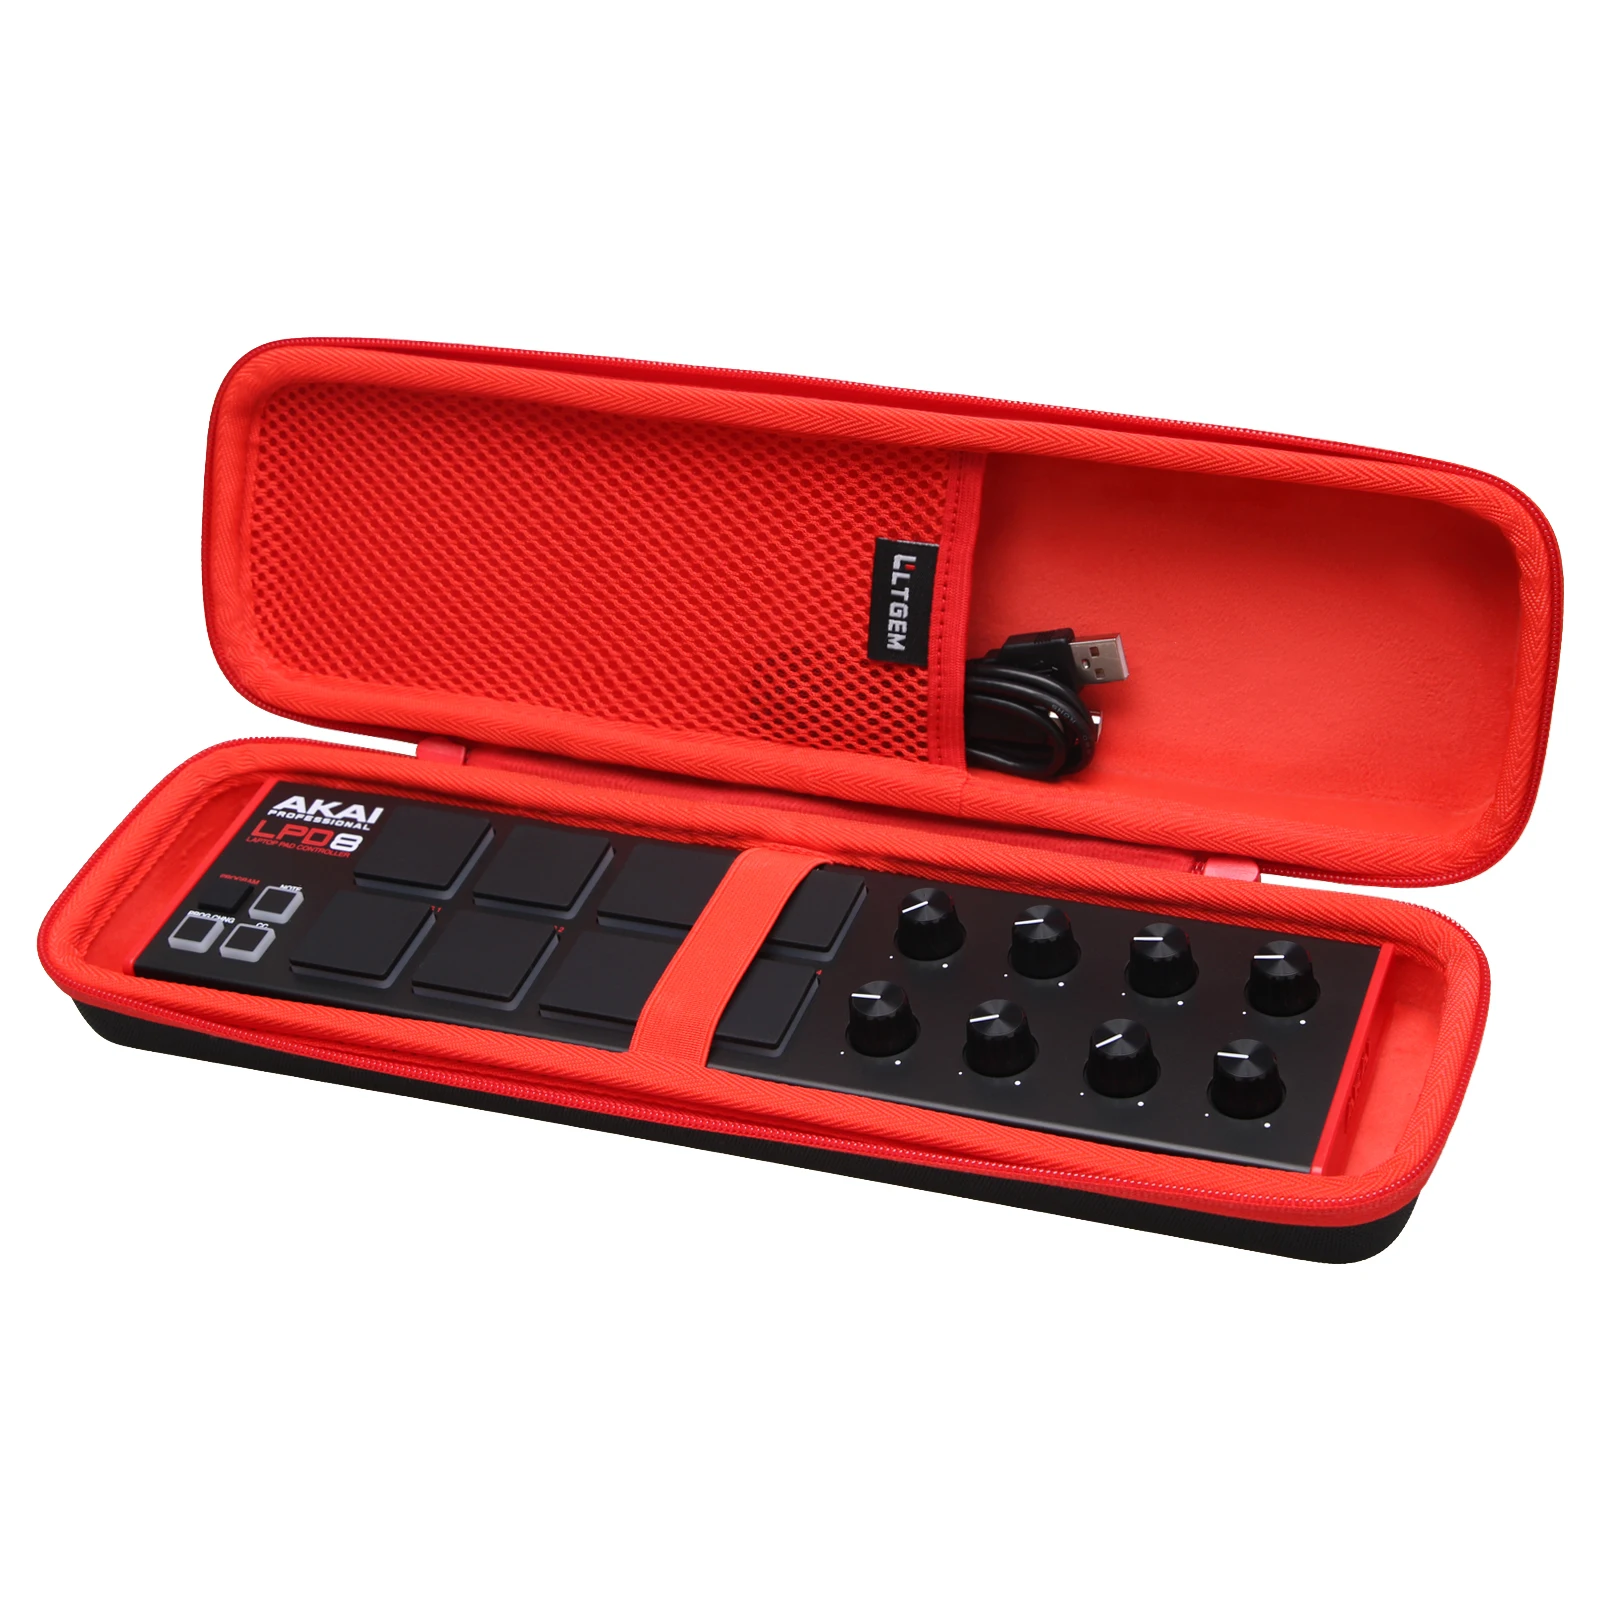 LTGEM pouzdro pro AKAI professionalltgem pouzdro pro AKAI odborný LPD8 - USB MIDI controlle hudba zařízení úložný skříňka